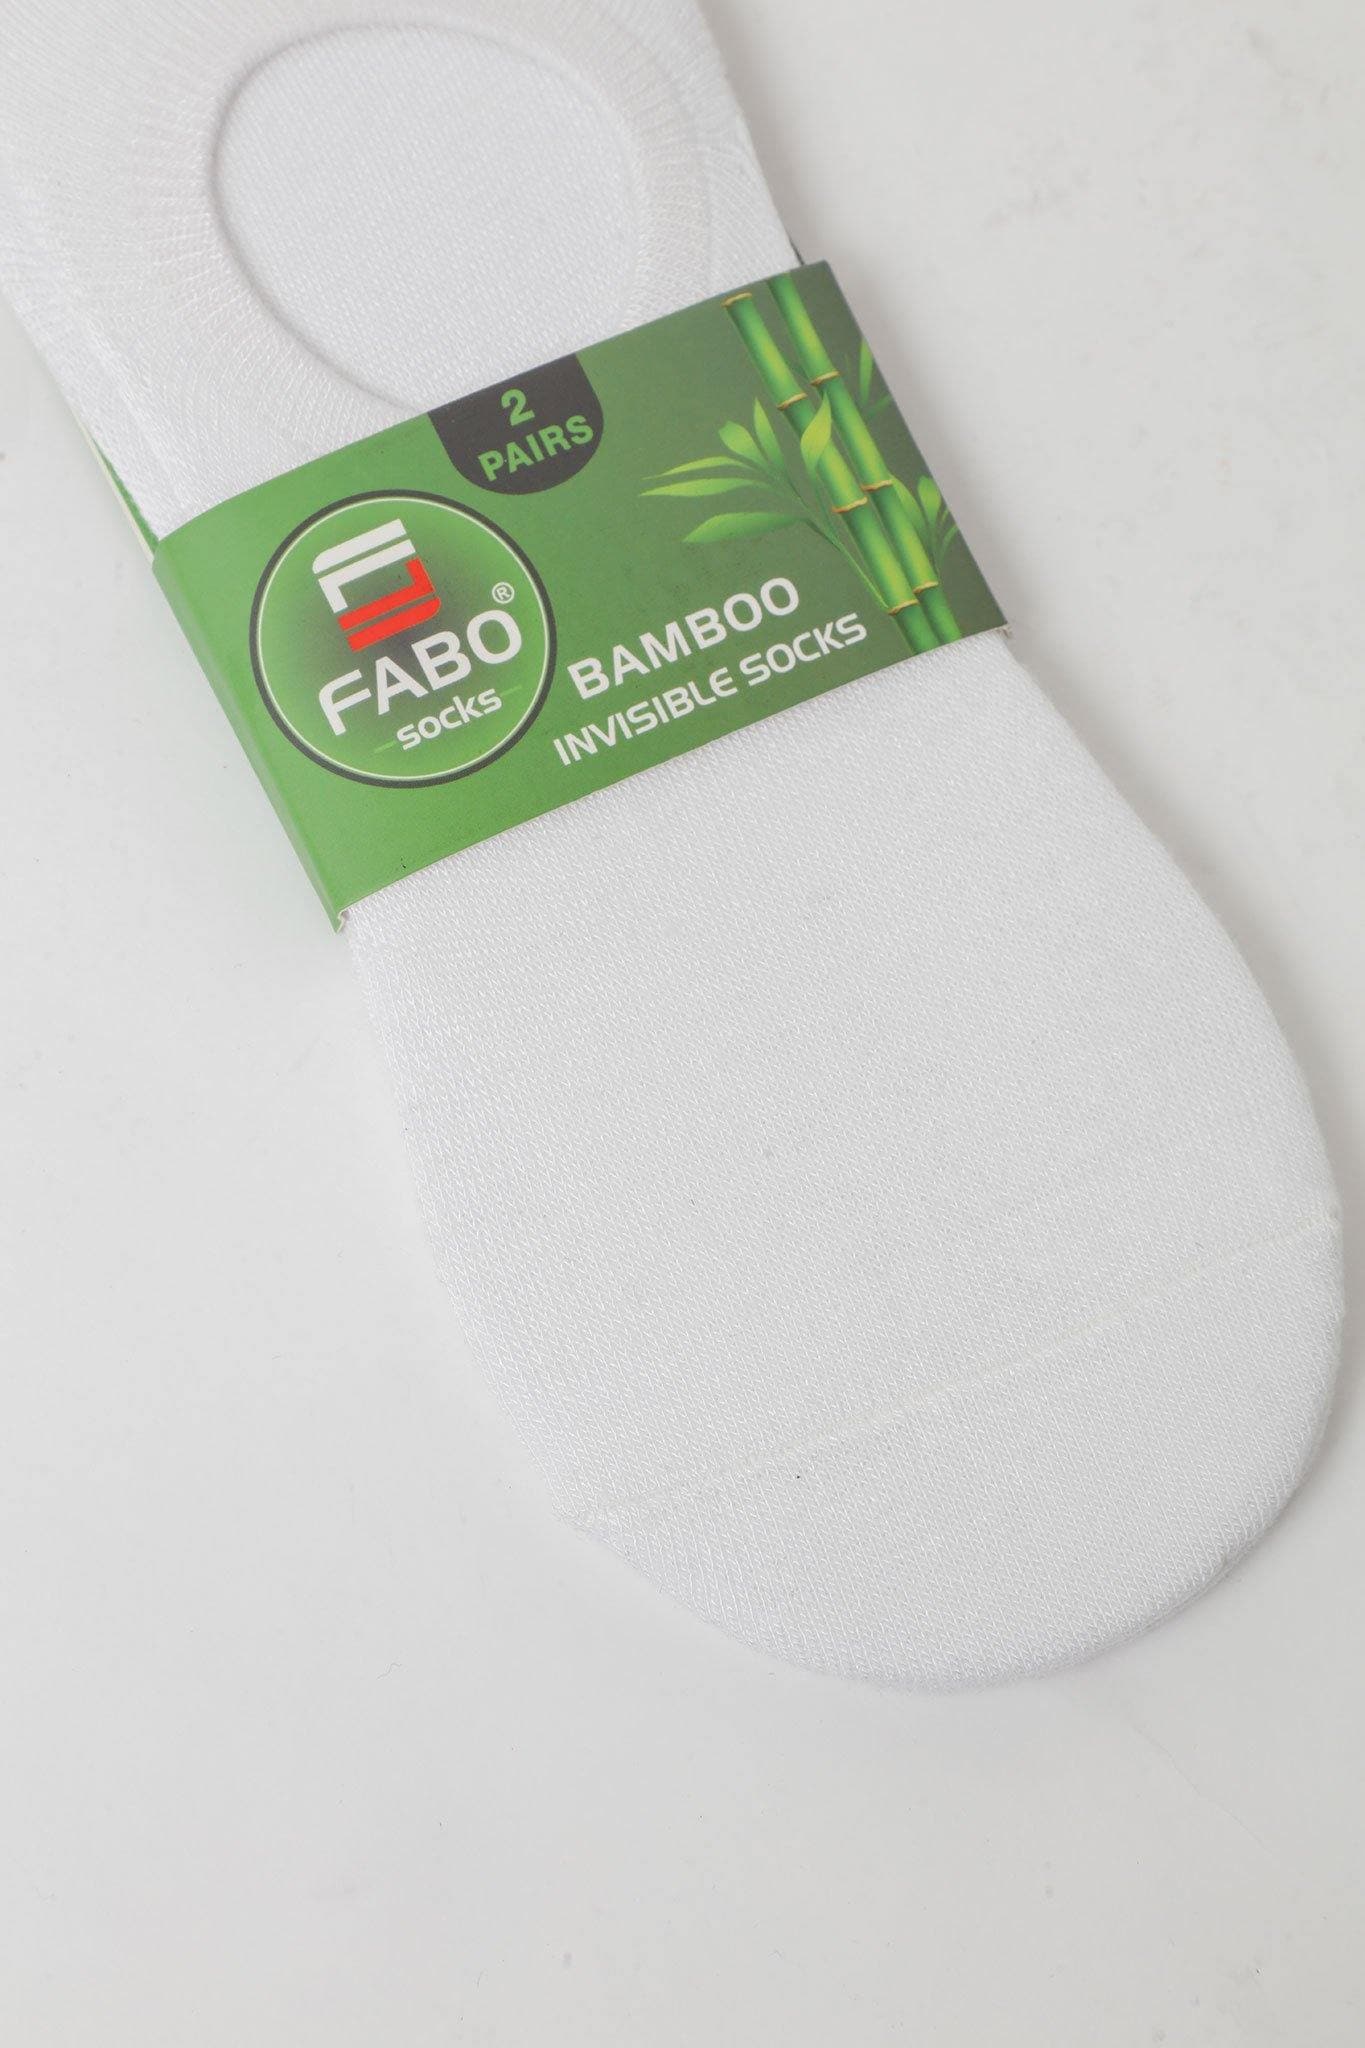 MEN'S 2PAIRS BAMBOO INVISIBLE SOCKS, Socks, CORADO, accessories, footware, invisible, men, socks, white, coradomoda, coradomoda.com